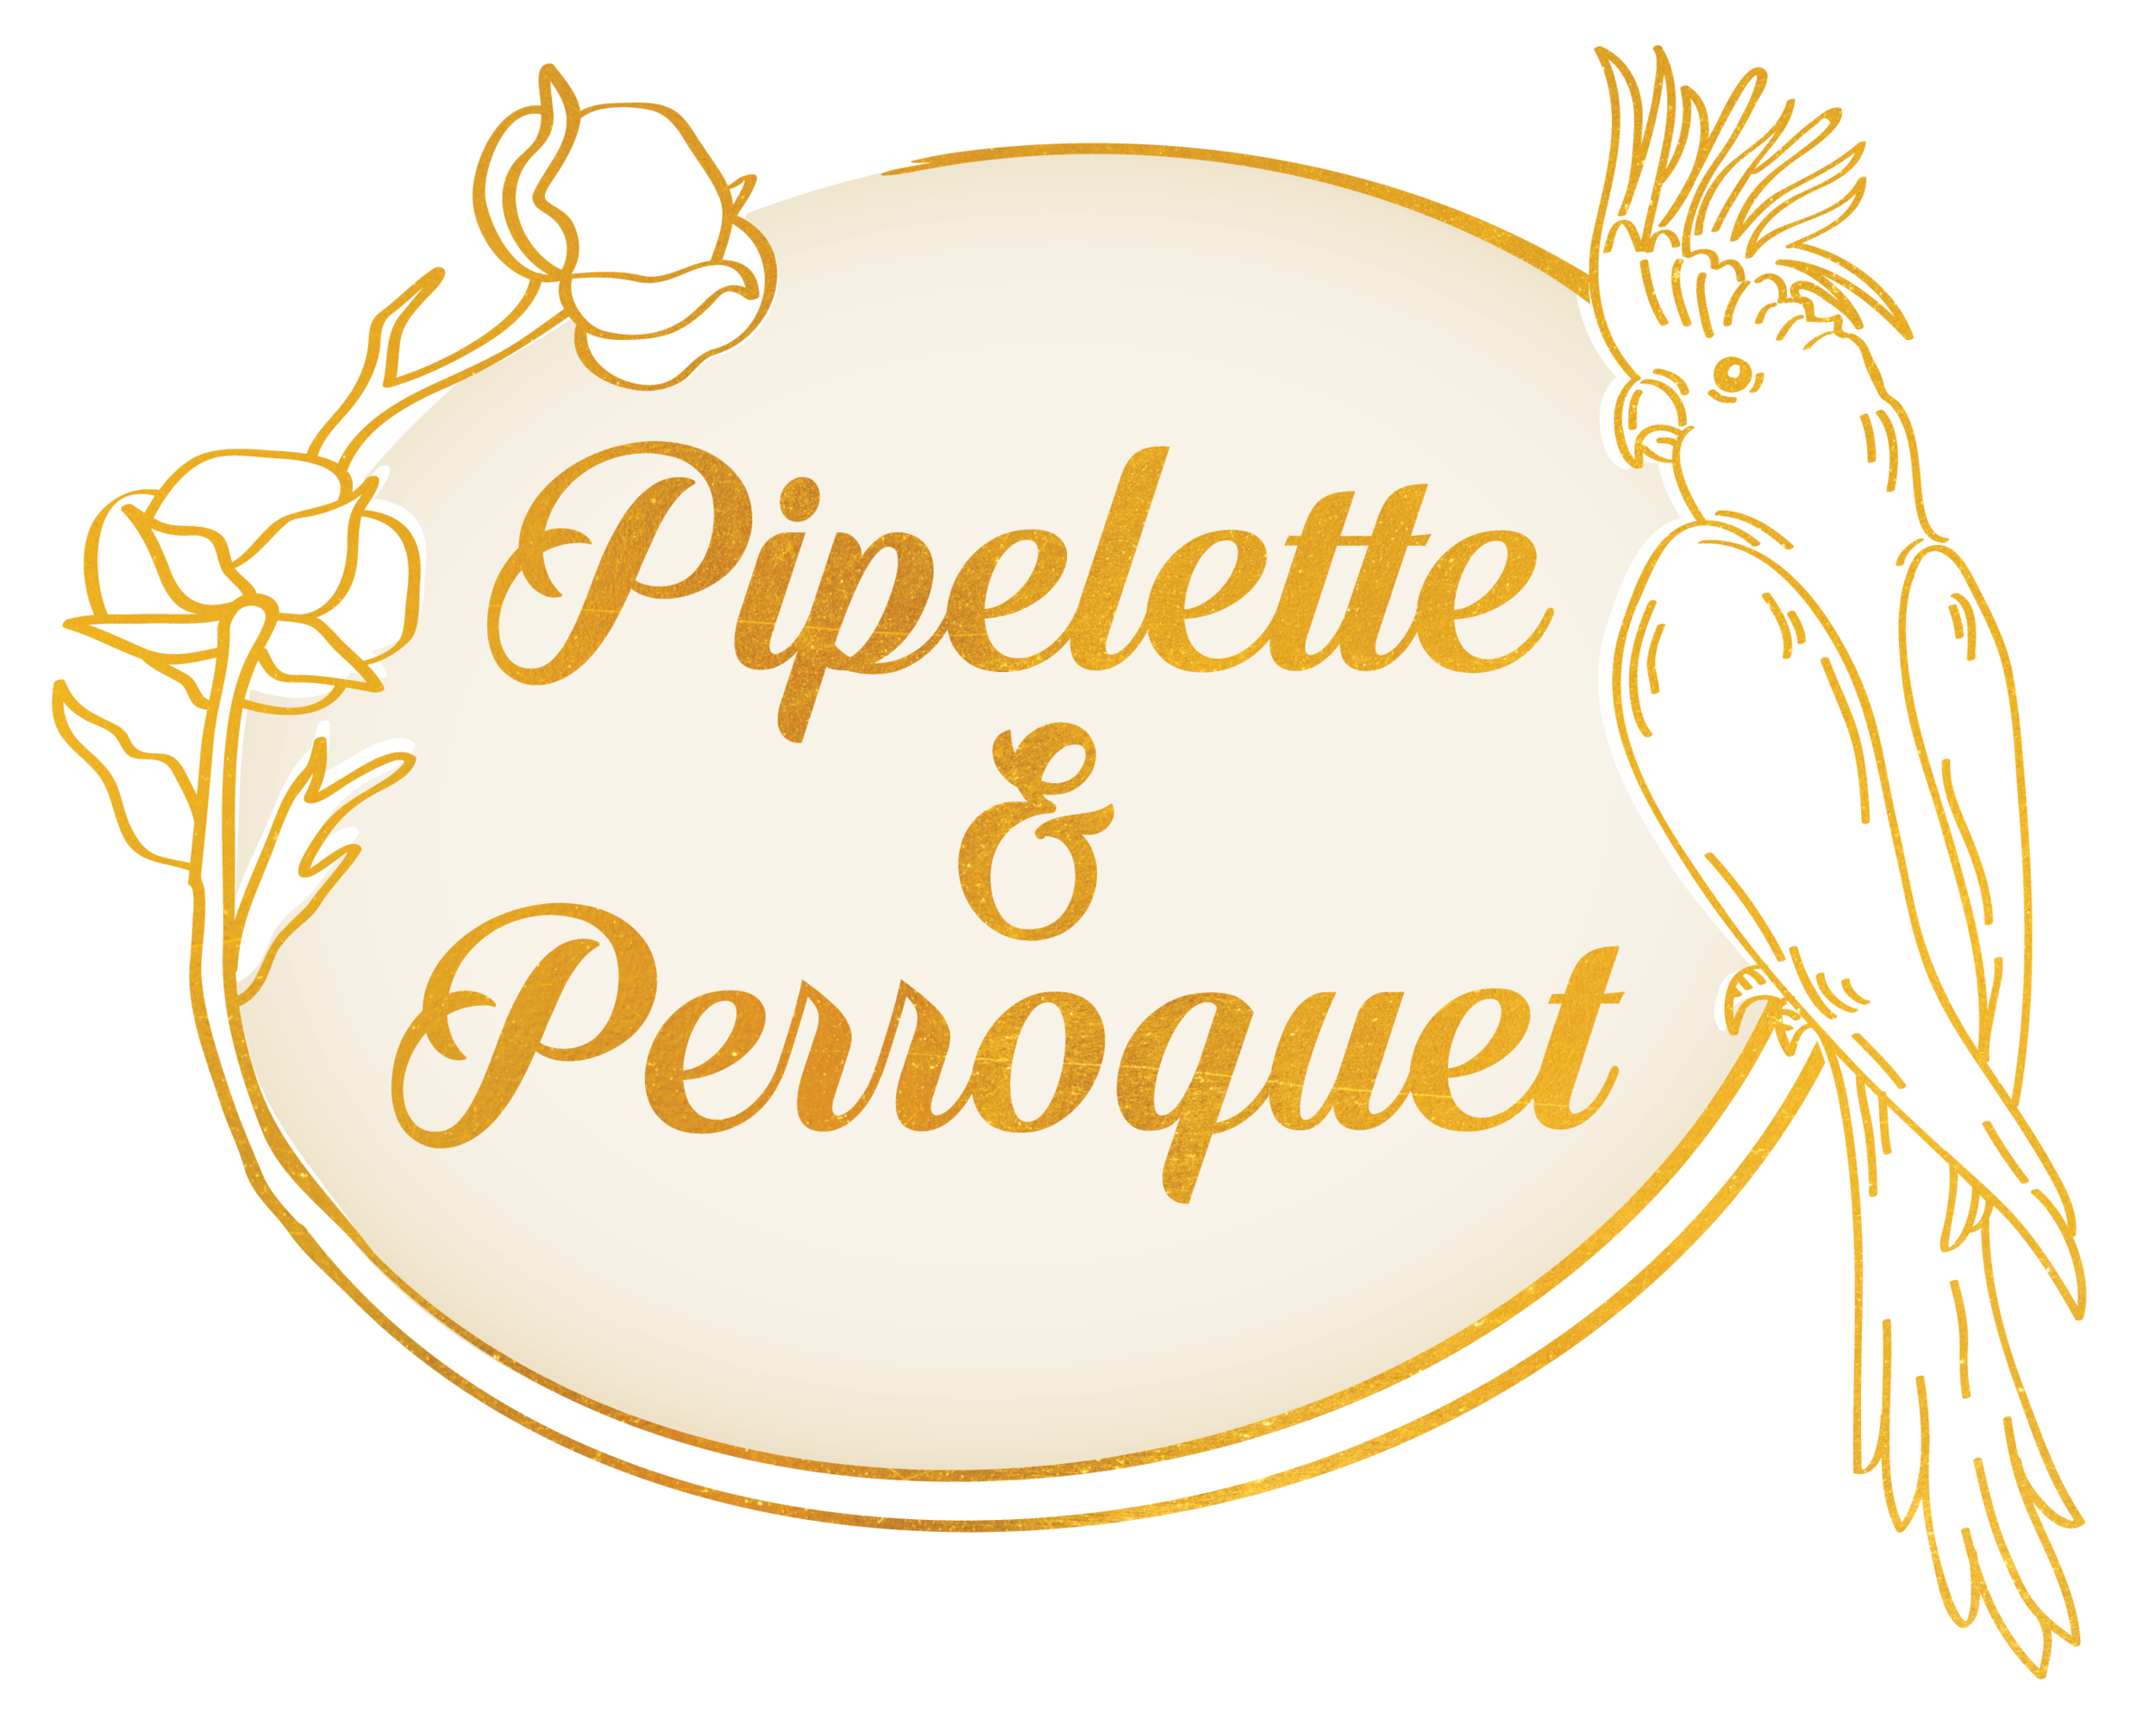 Pipelette et Perroquet